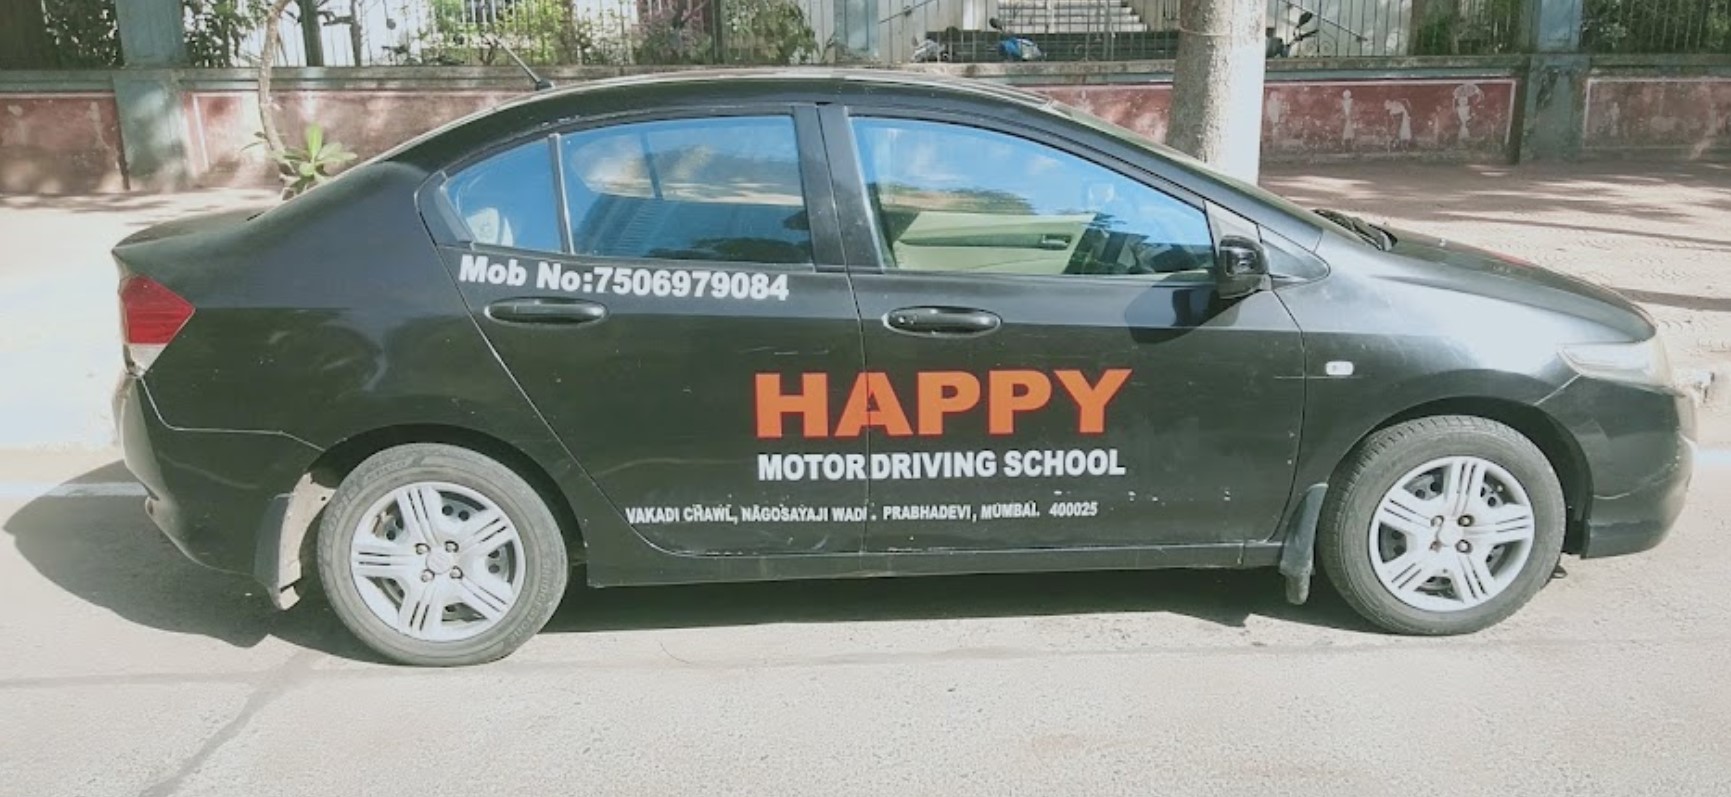 HAPPY MOTOR DRIVING SCHOOL in Prabhadevi